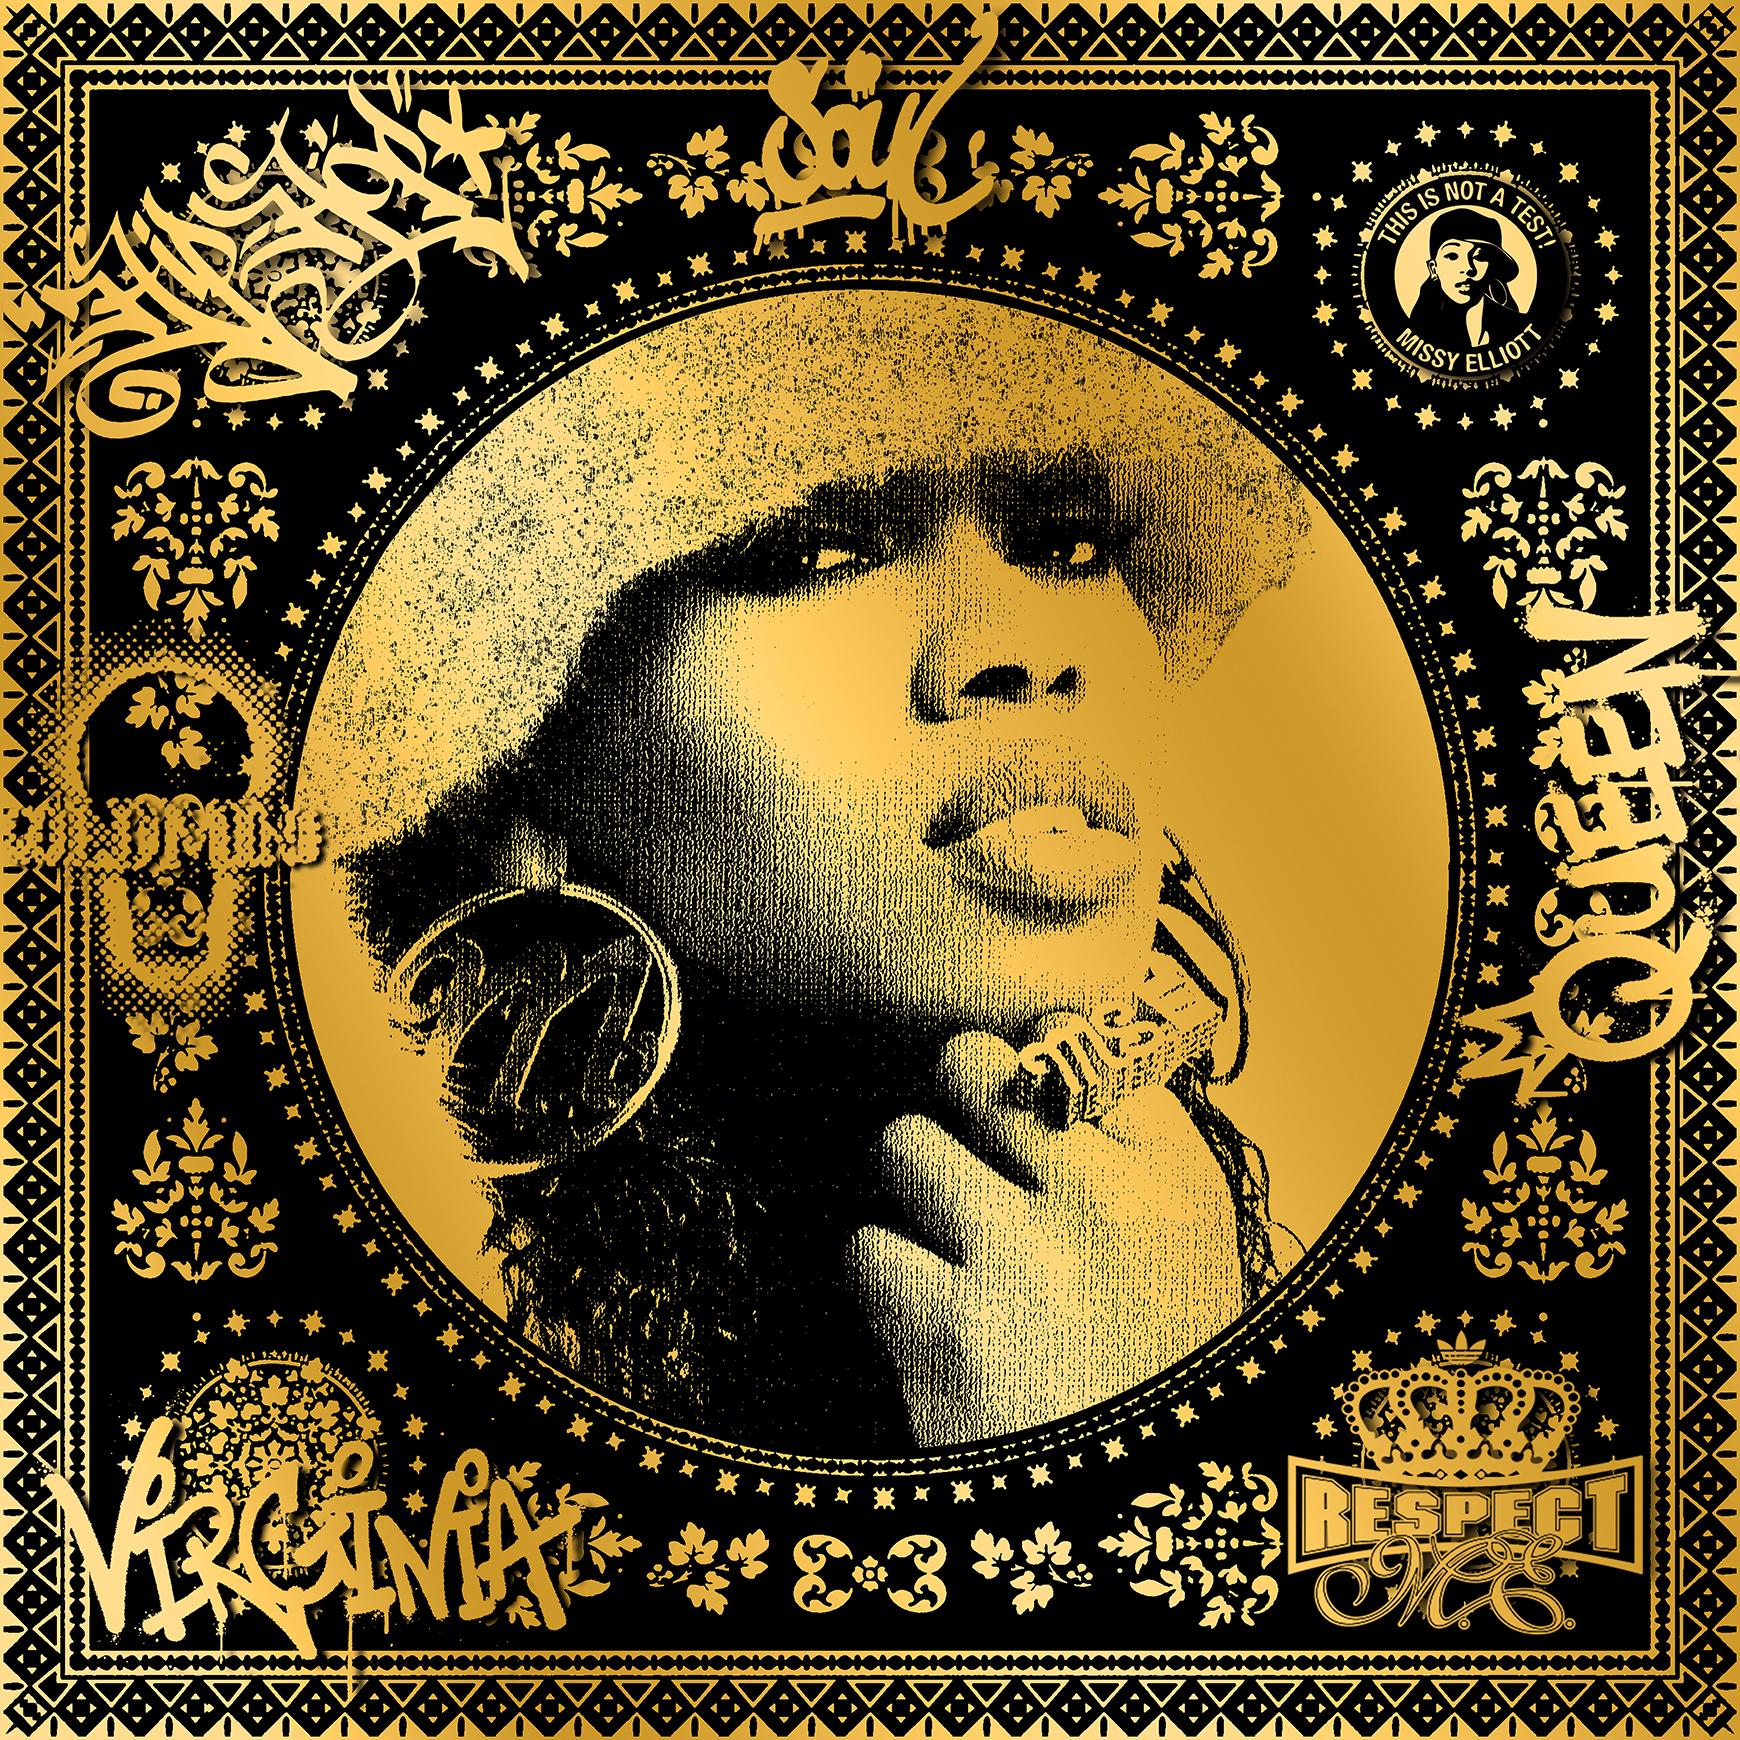 Missy Elliott (Gold) (50 Years, Hip Hop, Rap, Iconic, Artist, Musician, Rapper) - Print by Agent X